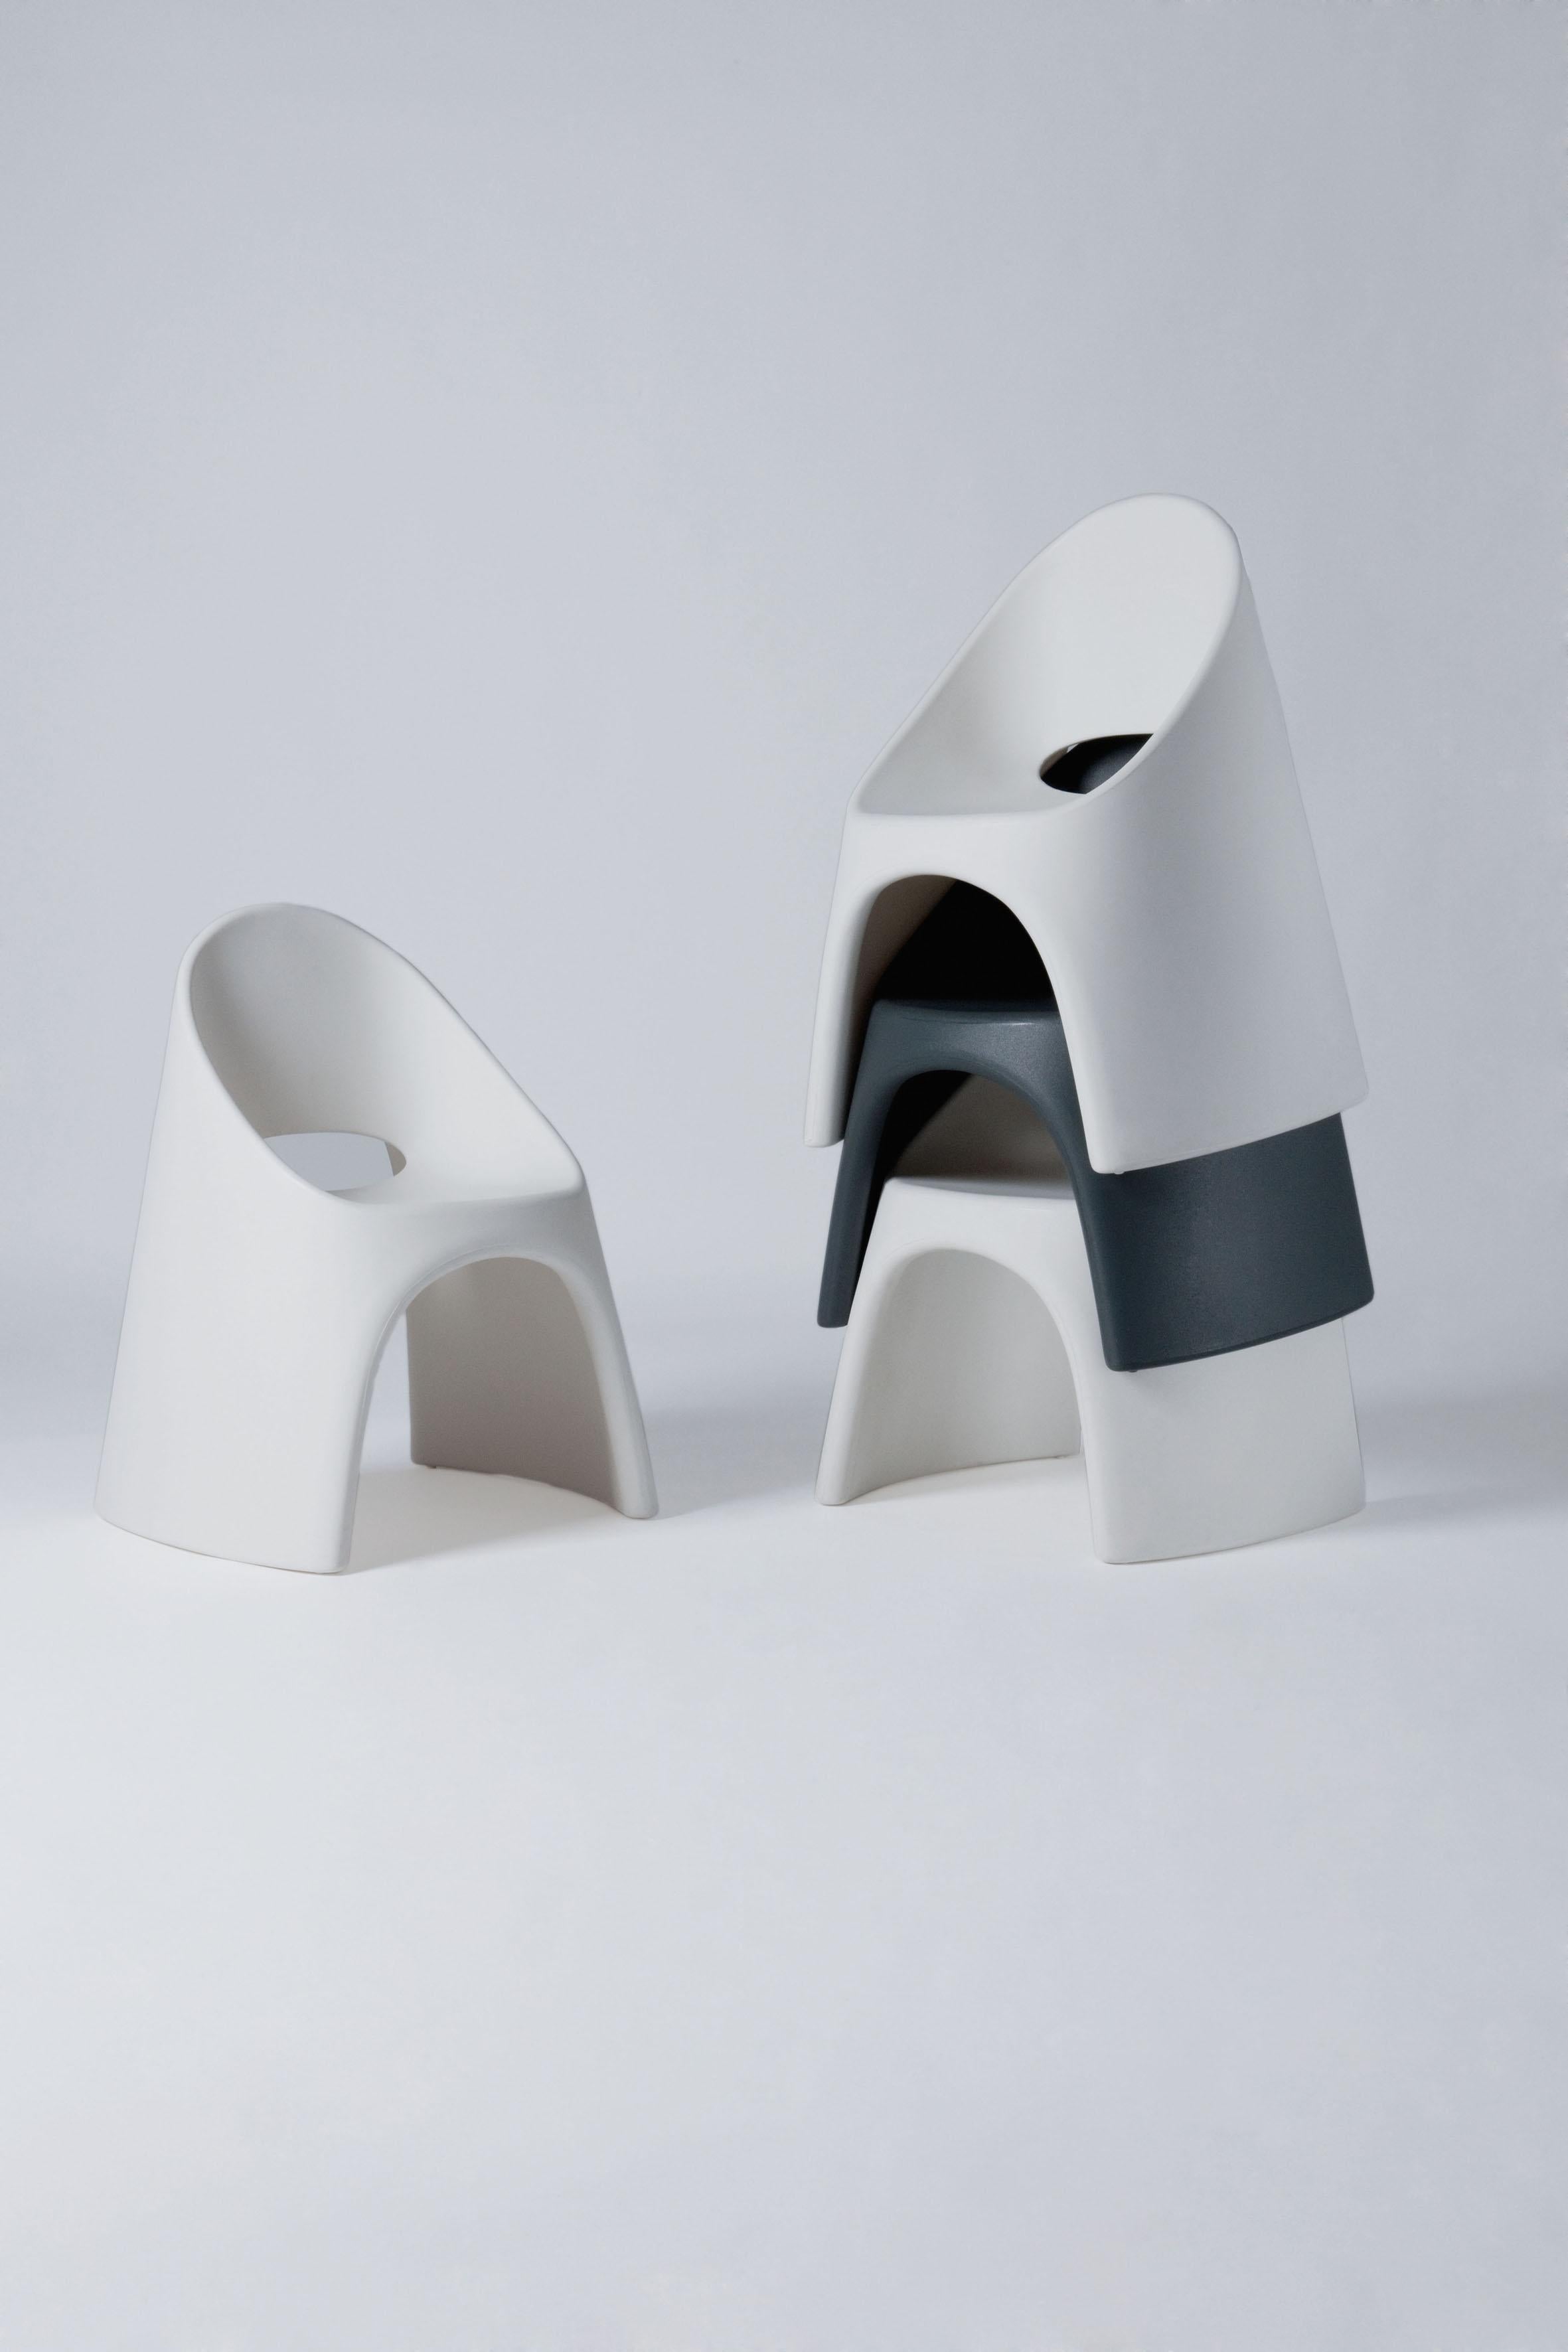 Italian Slide Design Amélie Chair in Powder Blue by Italo Pertichini For Sale